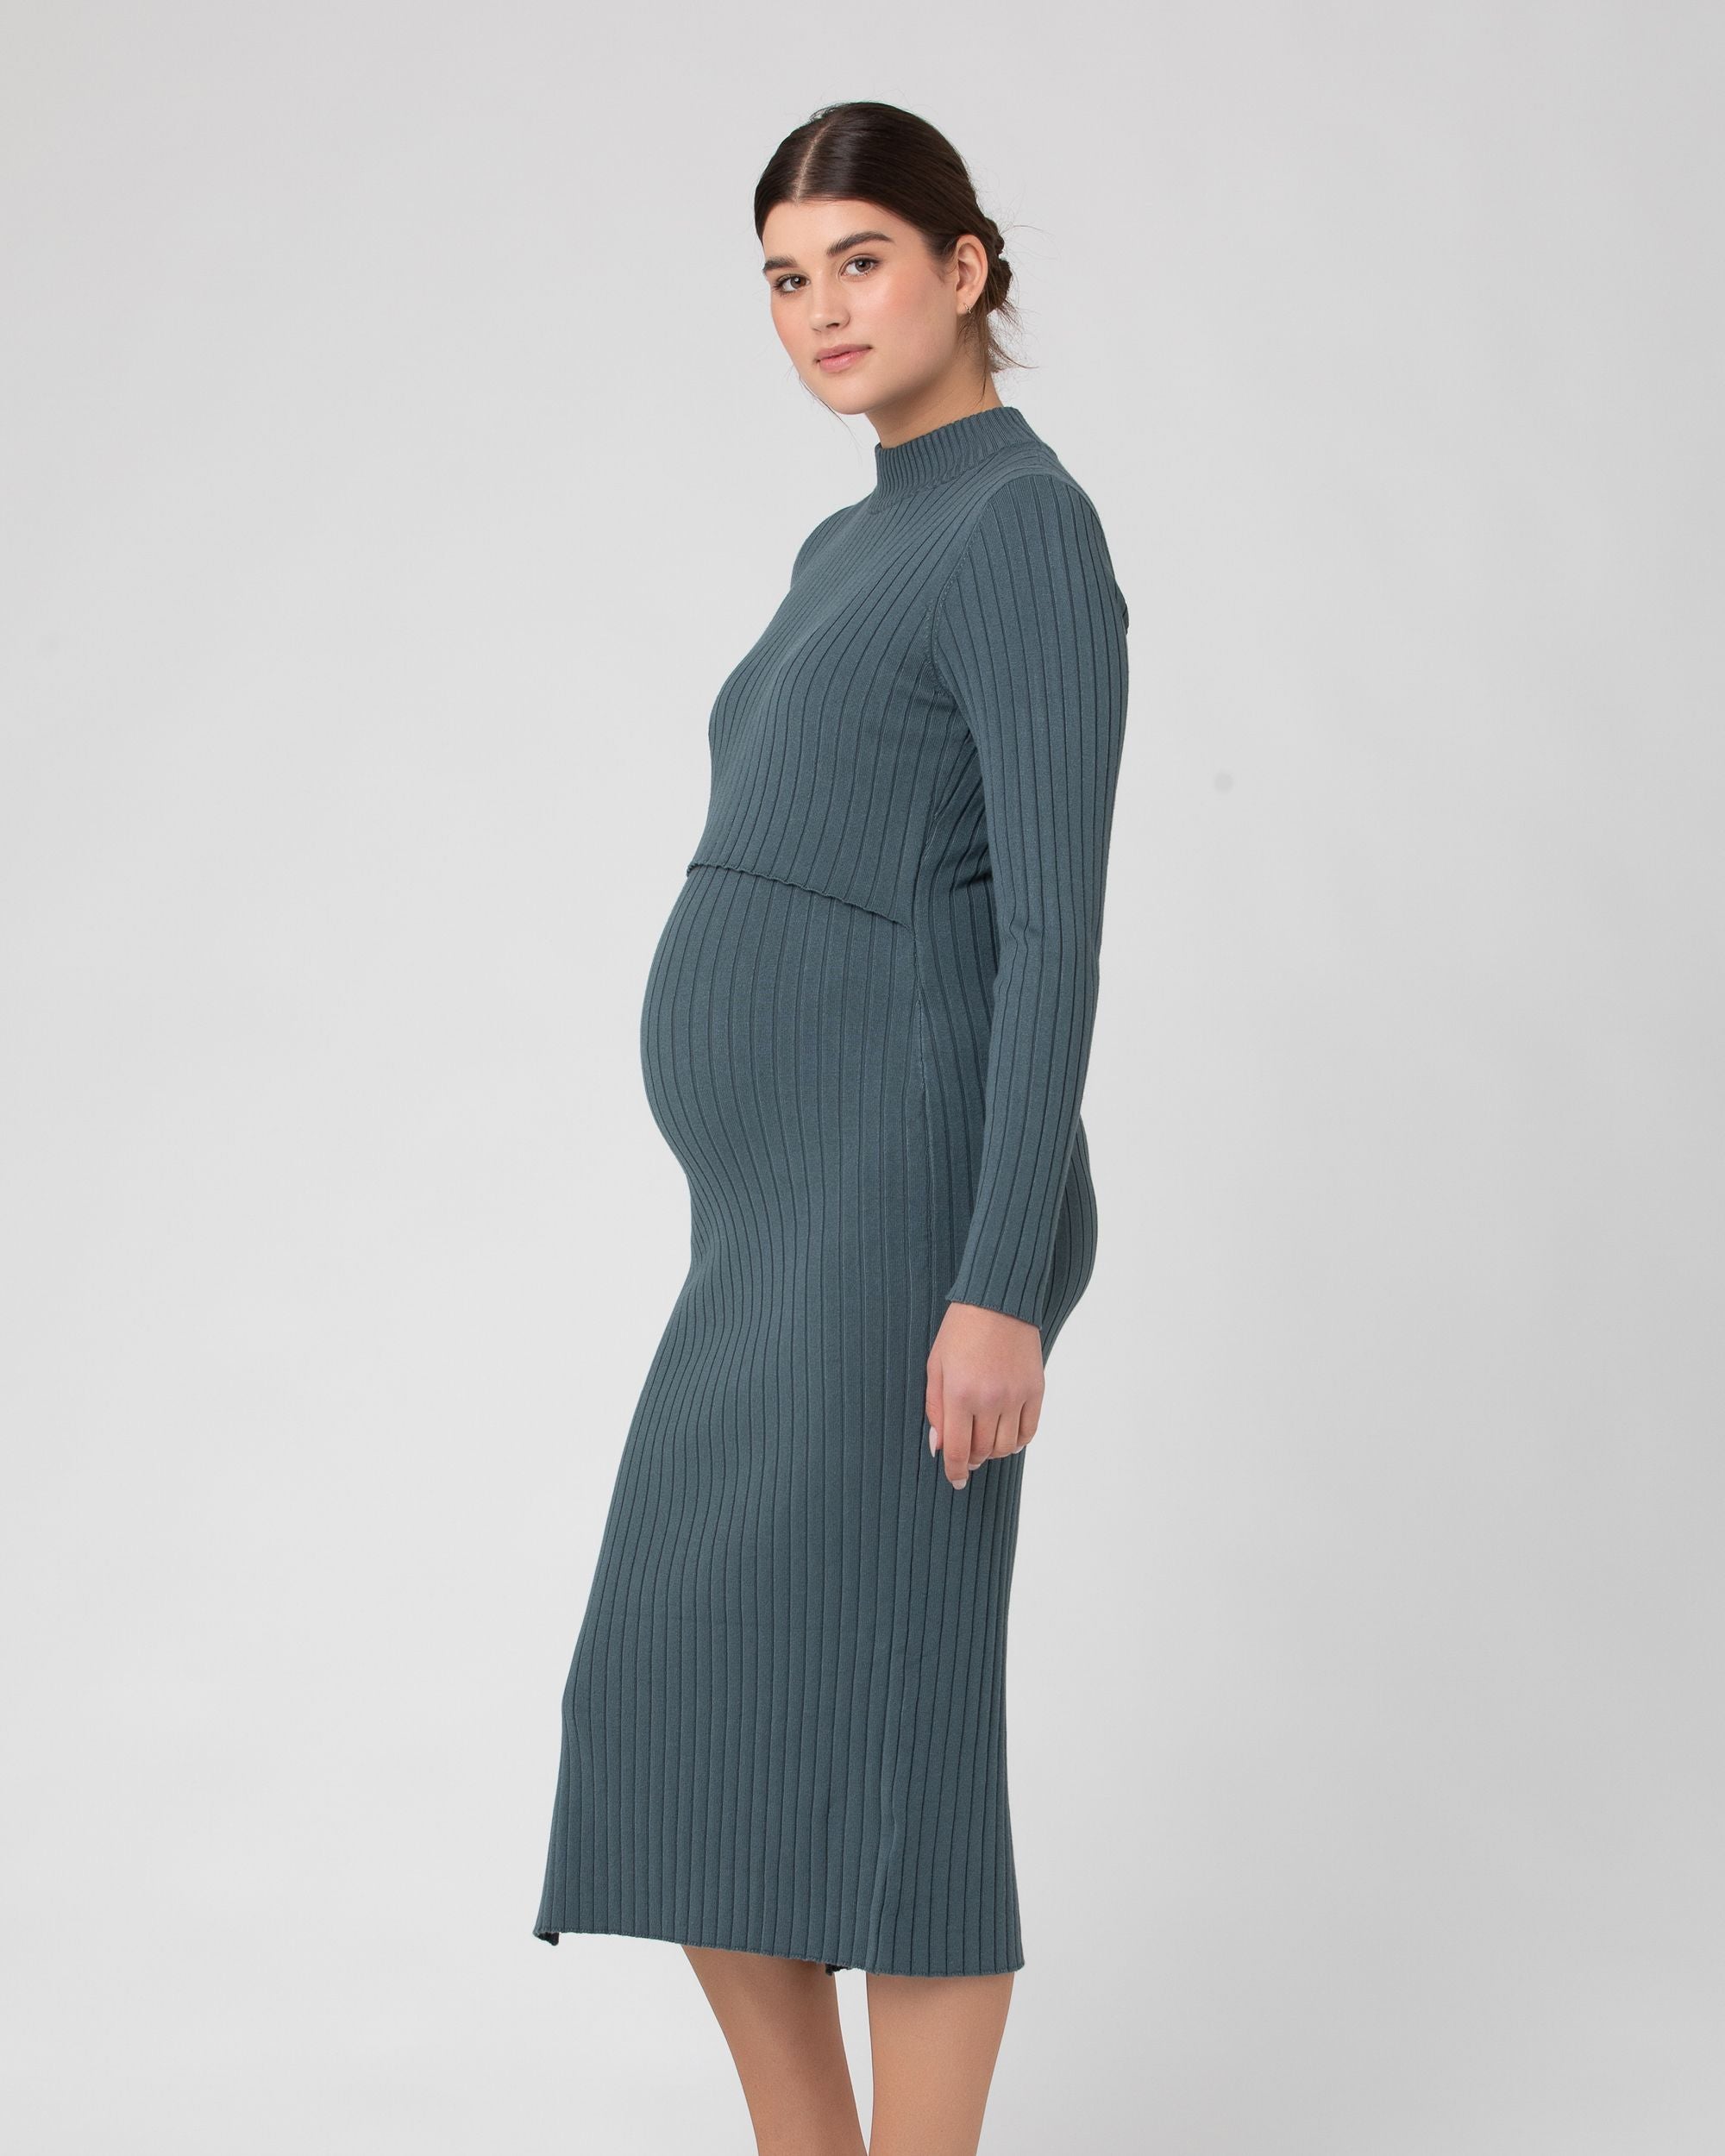 Nella Rib Knit Dress in Ivy by Ripe Maternity